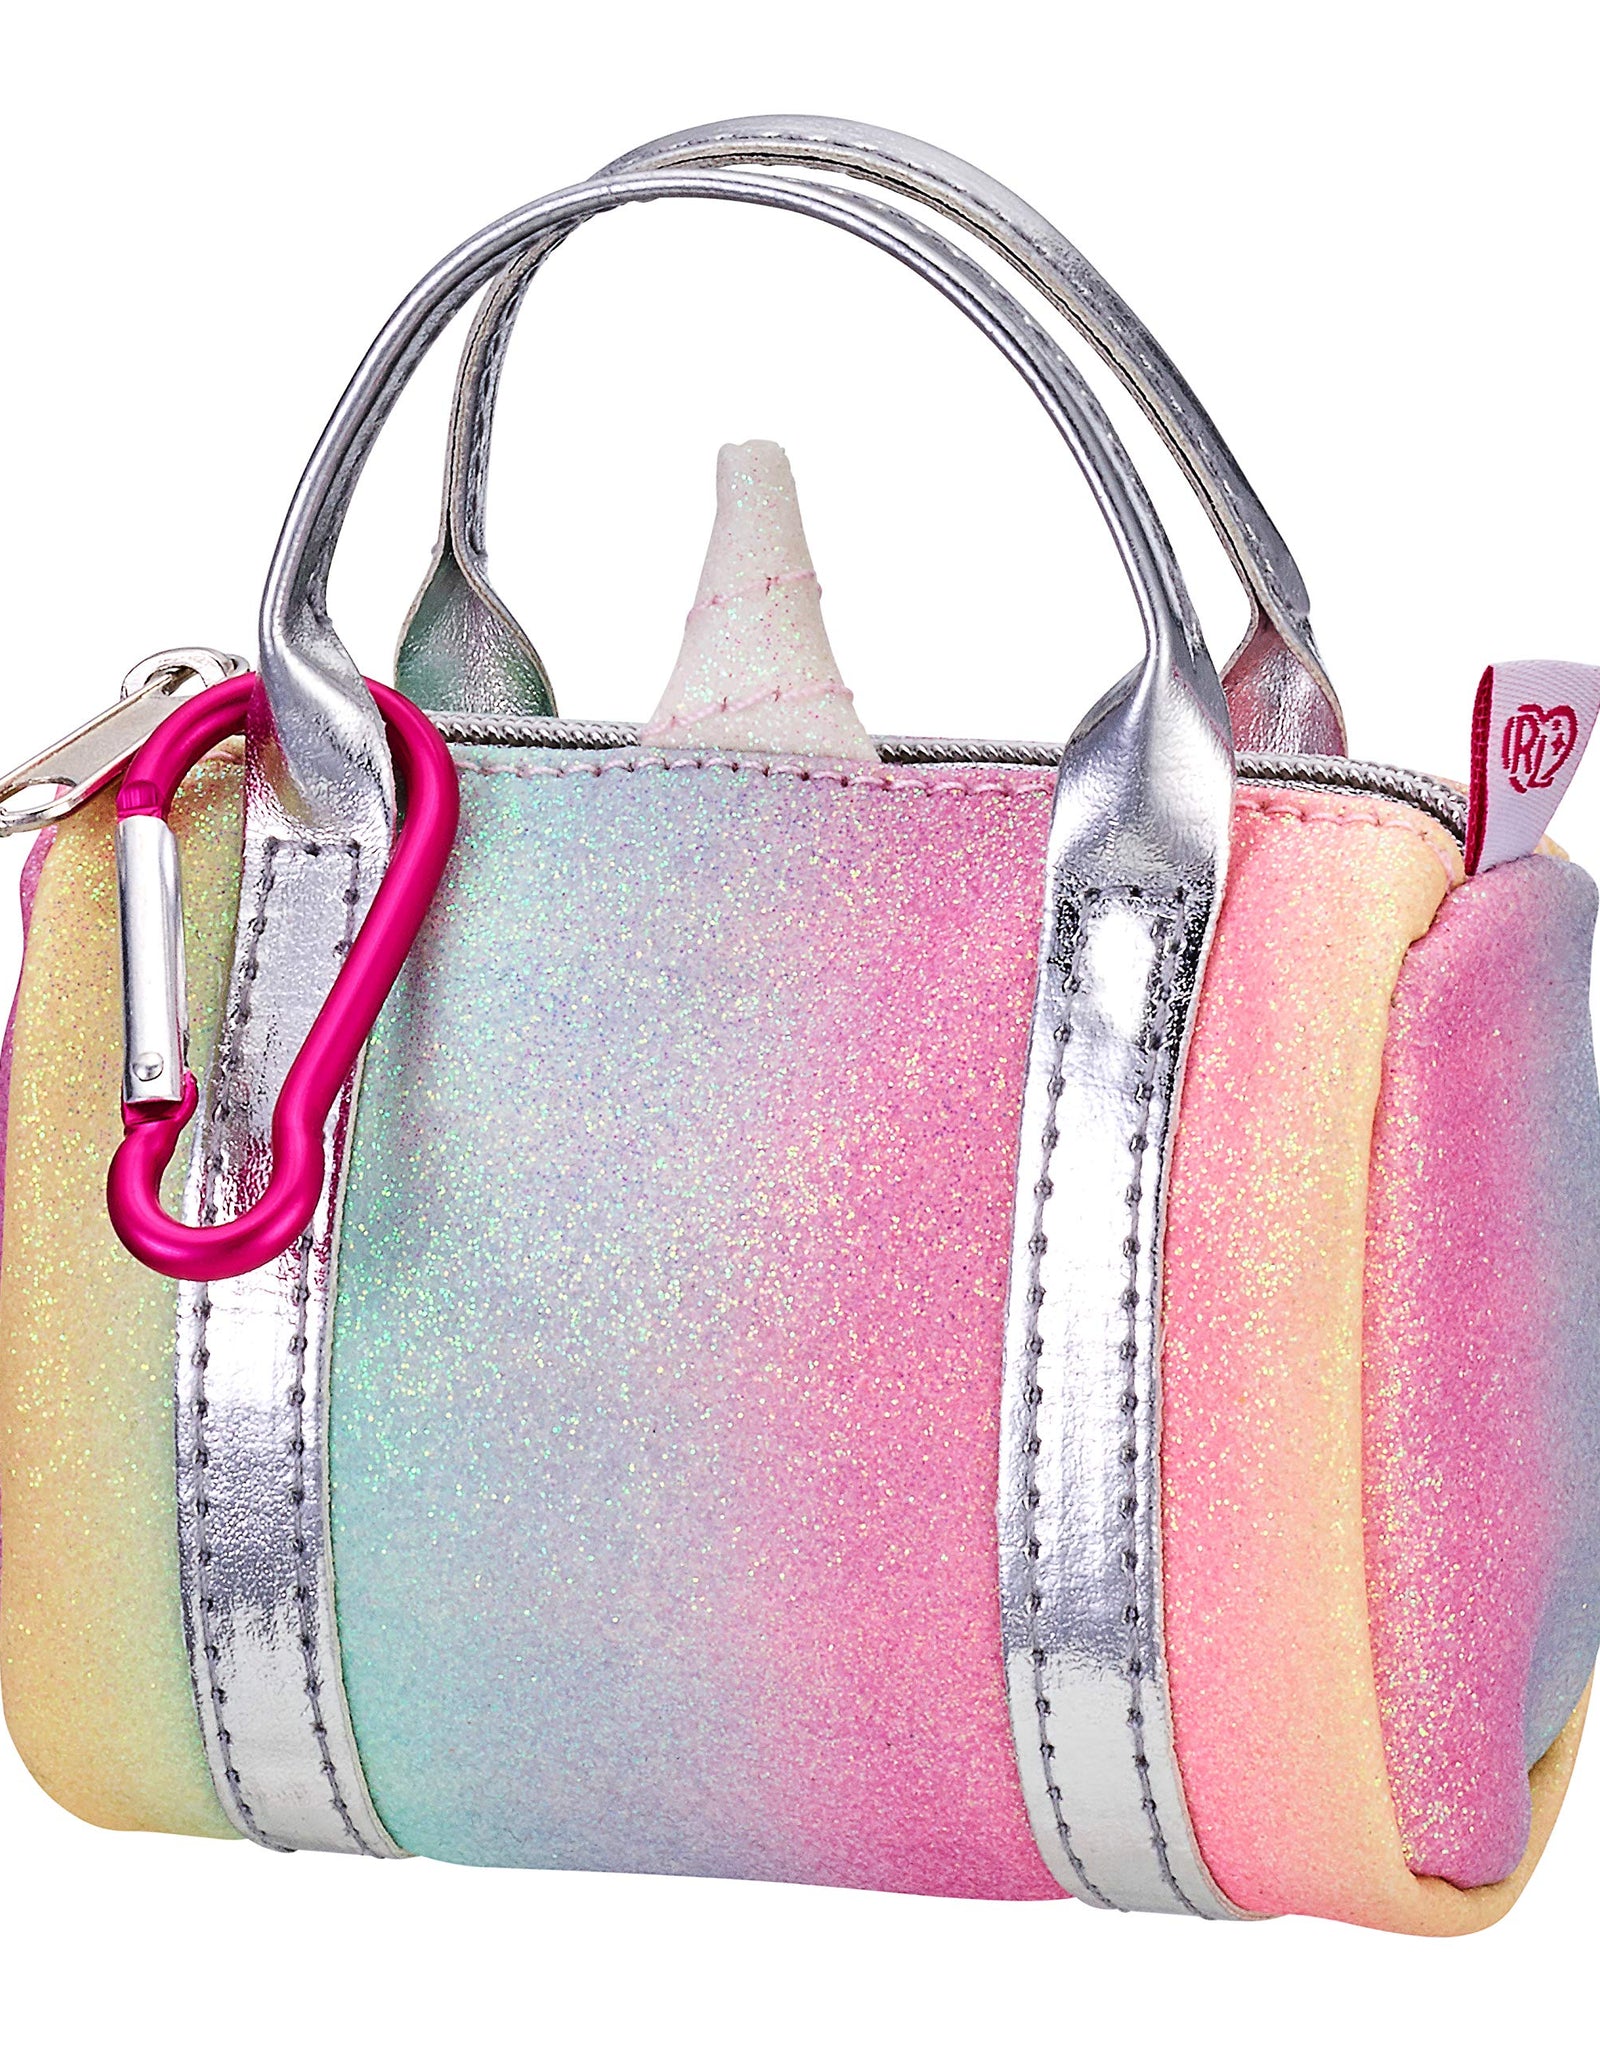 REAL LITTLES Locker + Handbag Bundle Pack! Each Pack Contains an Exclusive Locker, Duffle Bag + 15 Surprises Plus an Exclusive Handbag and Surprises from The Handbag Range (25286)